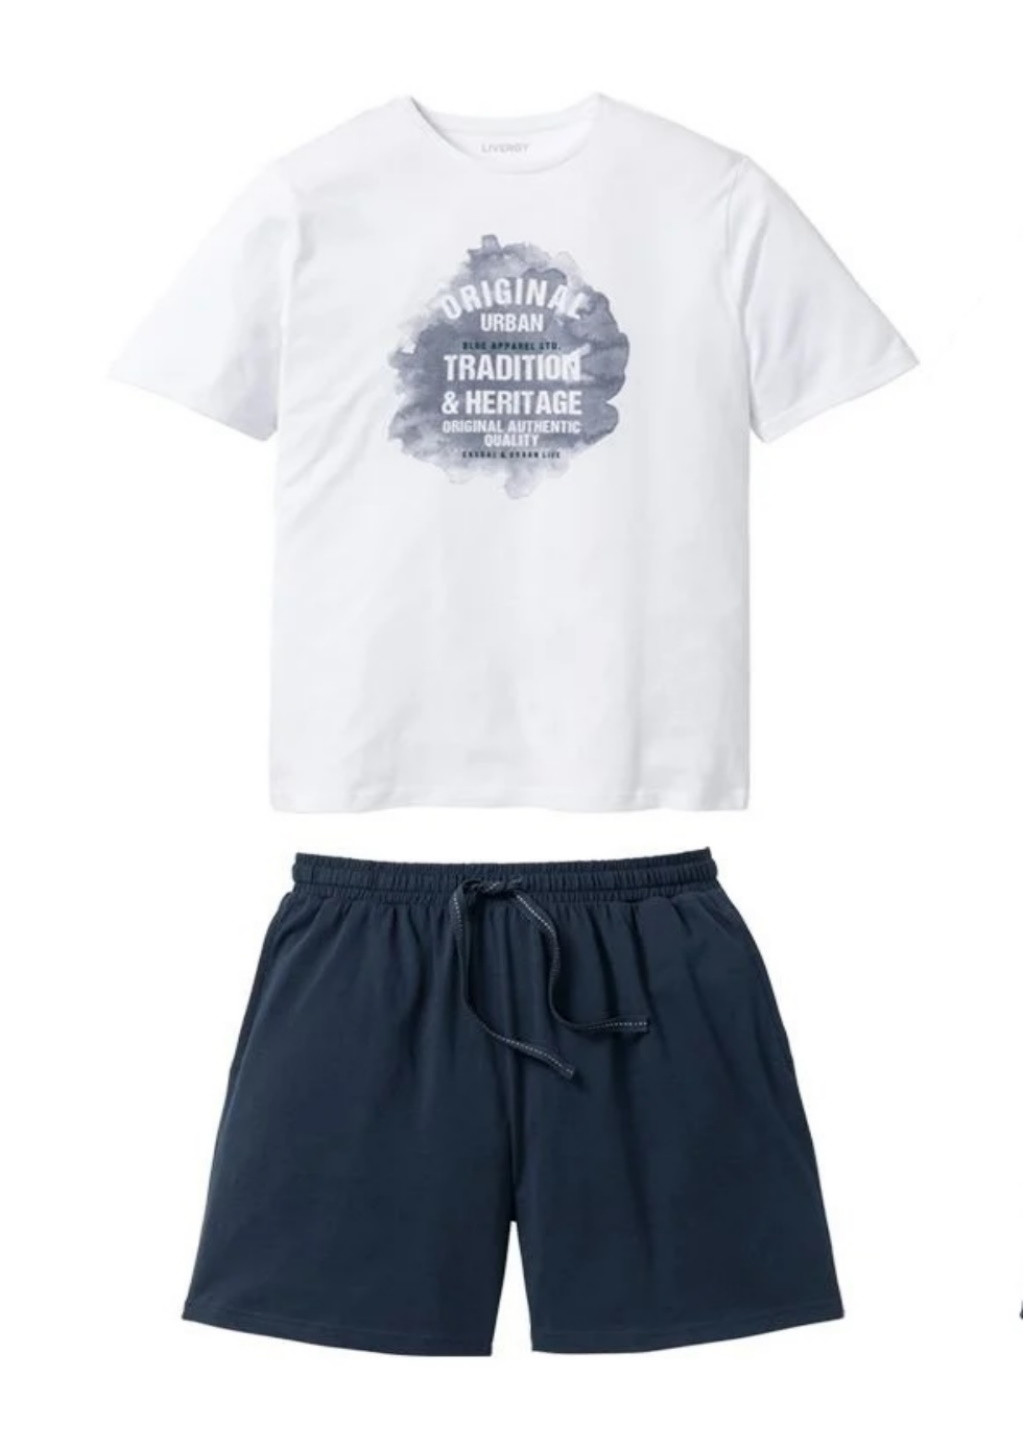 Пижама (футболка, шорты) Esmara футболка + шорты надпись белая домашняя трикотаж, хлопок